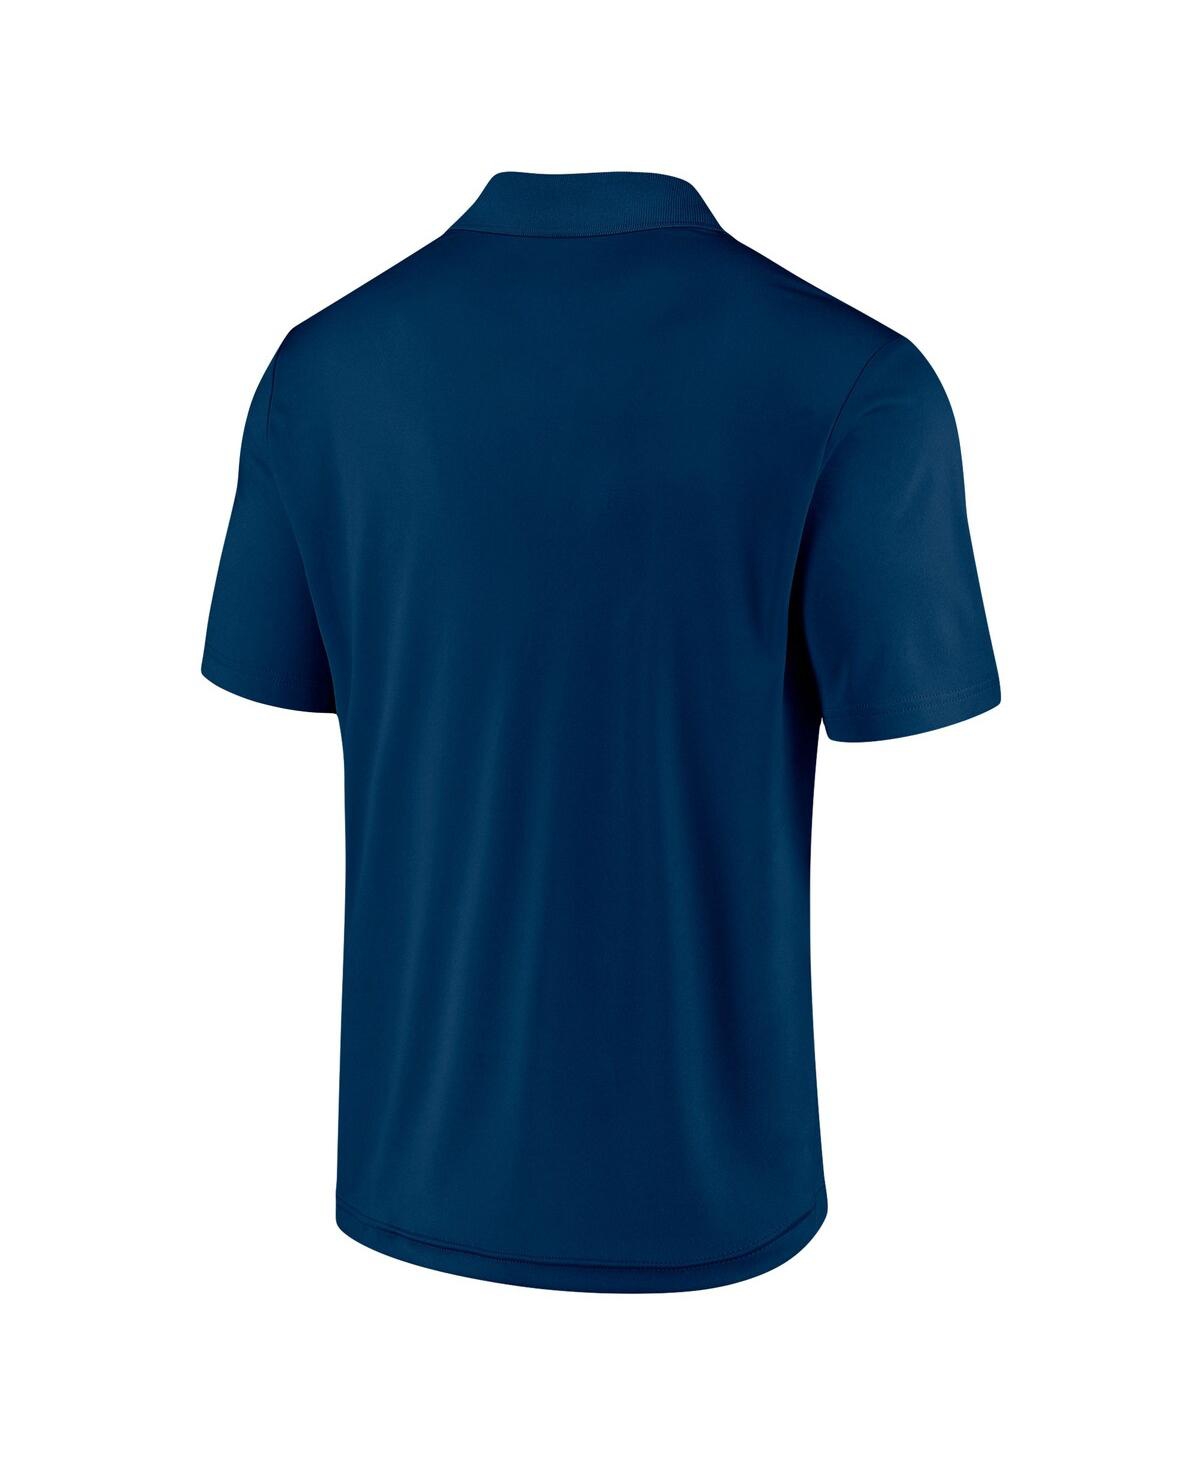 Shop Fanatics Men's  Navy Houston Texans Component Polo Shirt